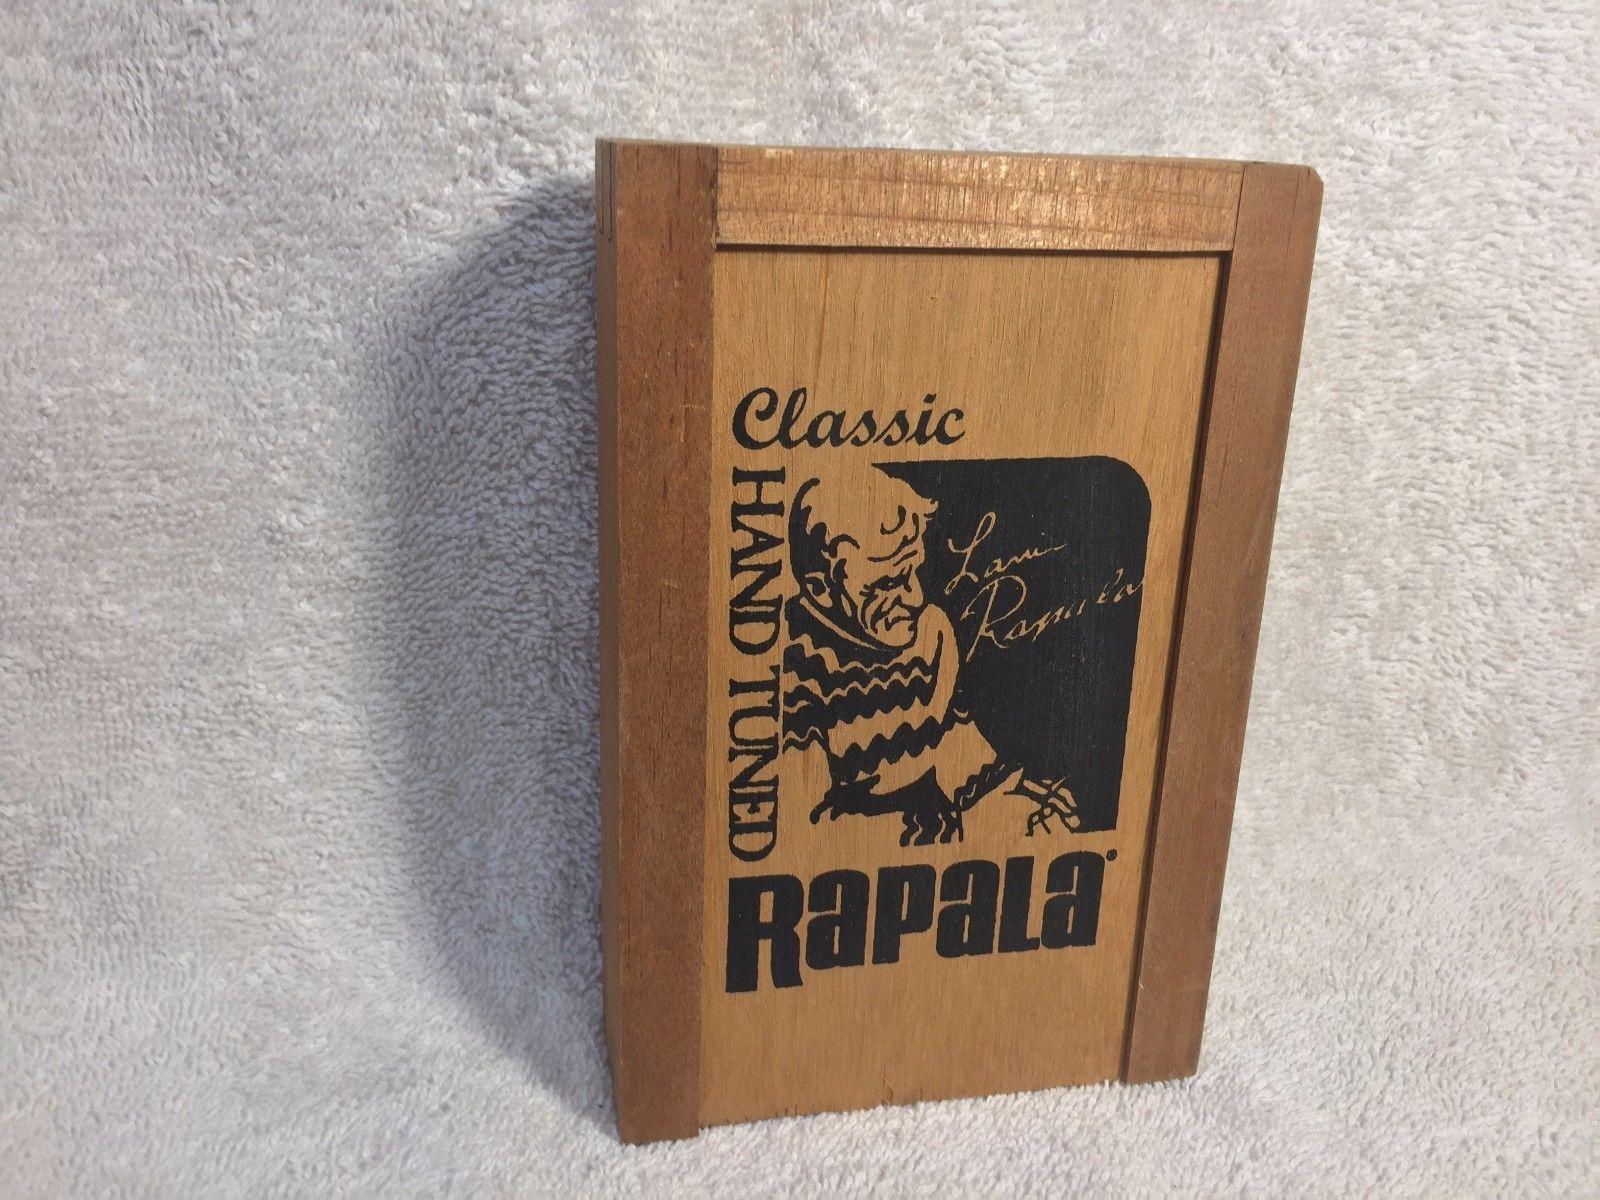 Rapala classic